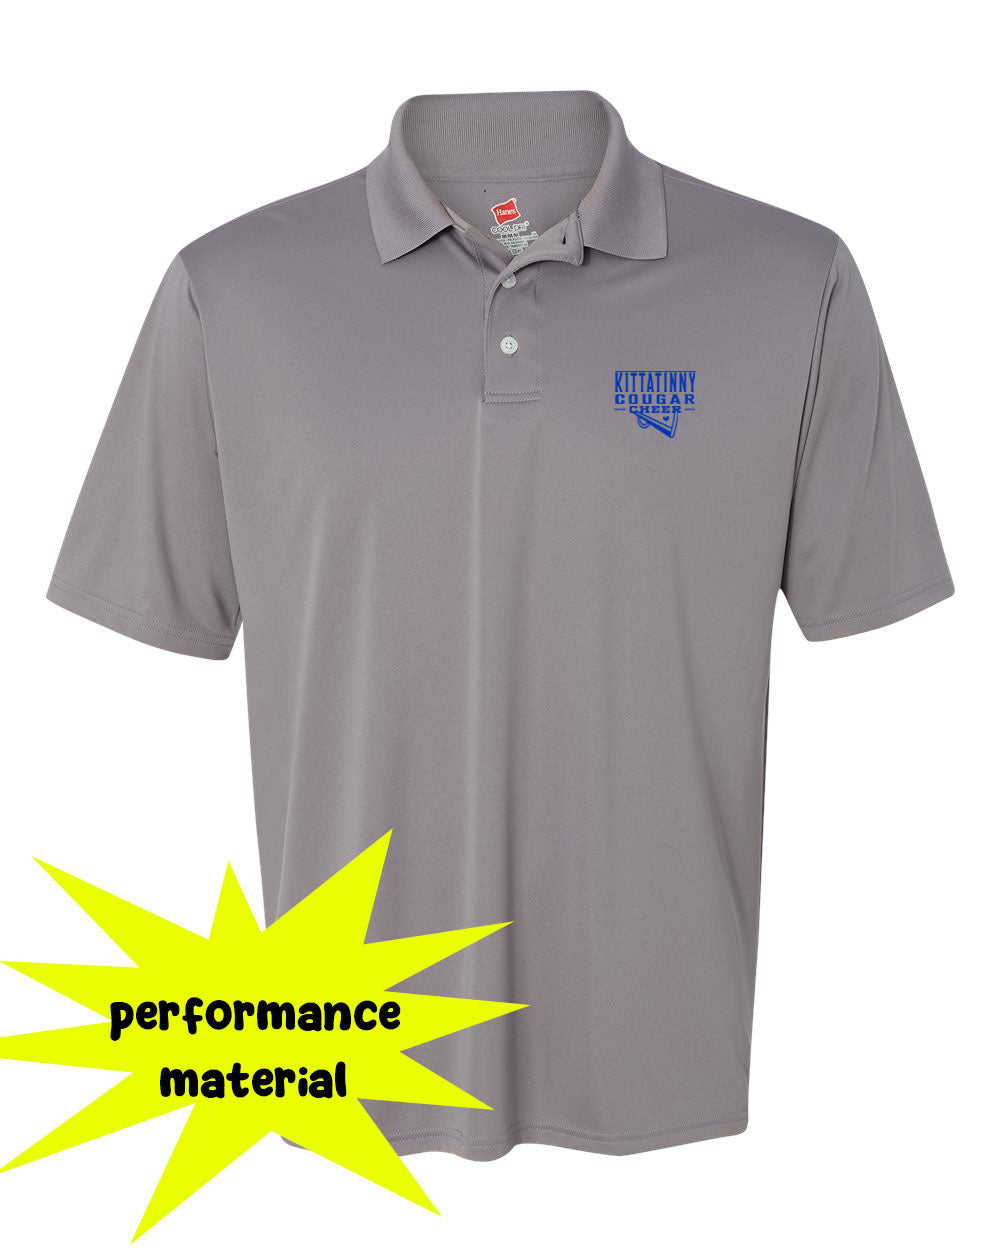 Kittatinny Cheer Performance Material Polo T-Shirt Design 11